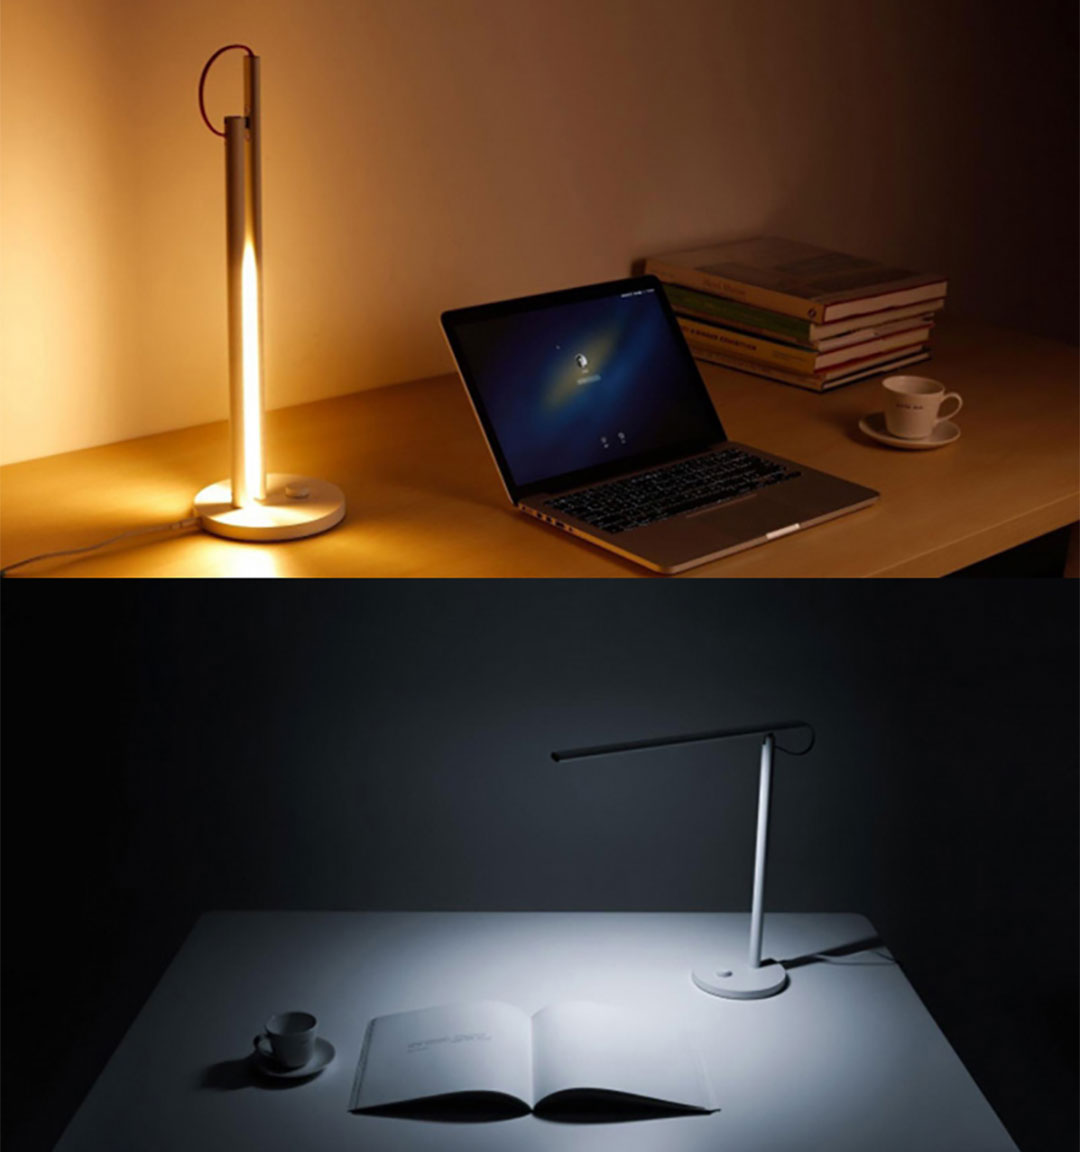 Xiaomi Led Lamp 1s